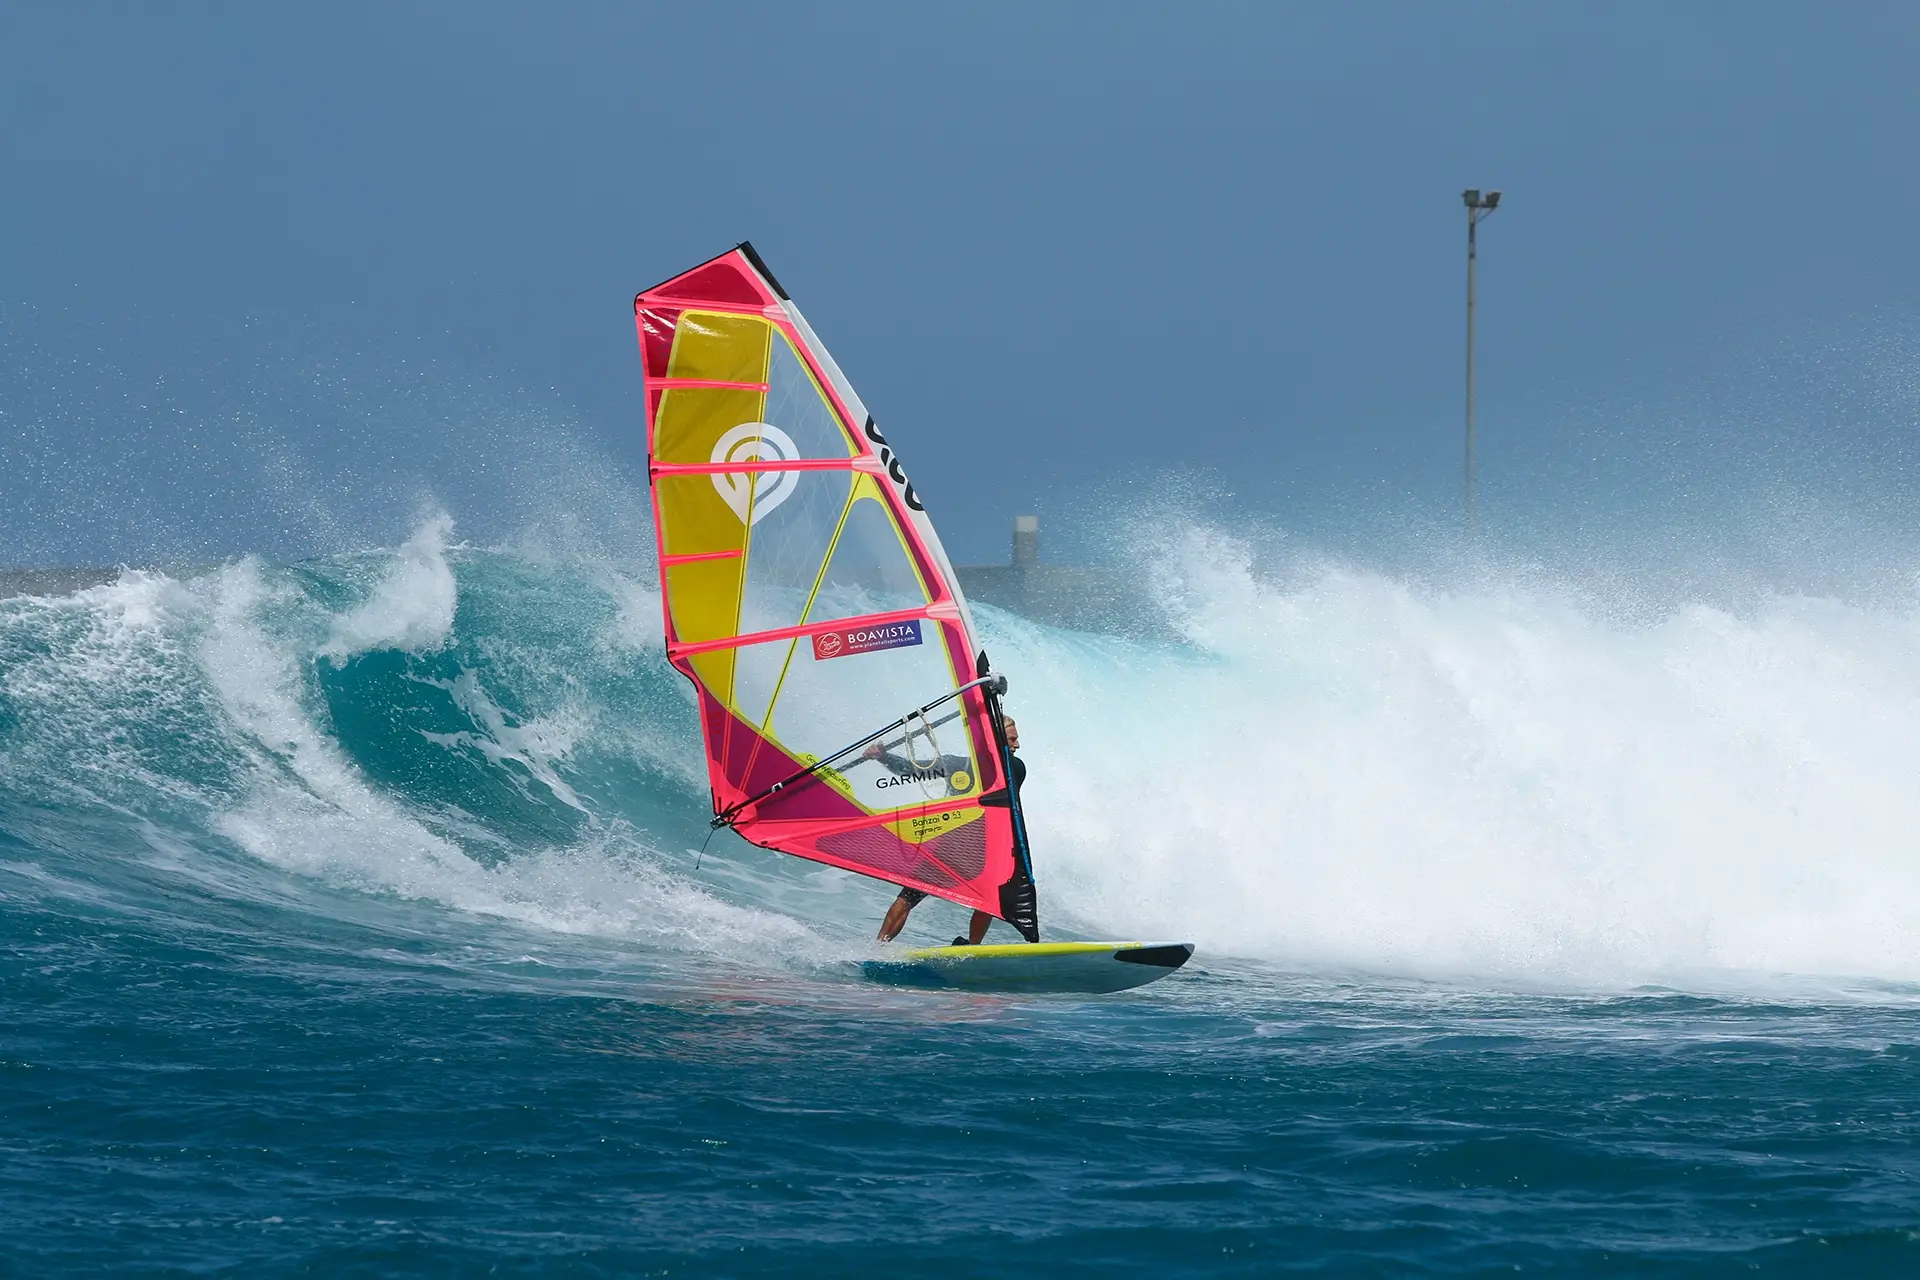 Windsurfer with pink sail in a wave at Boavista